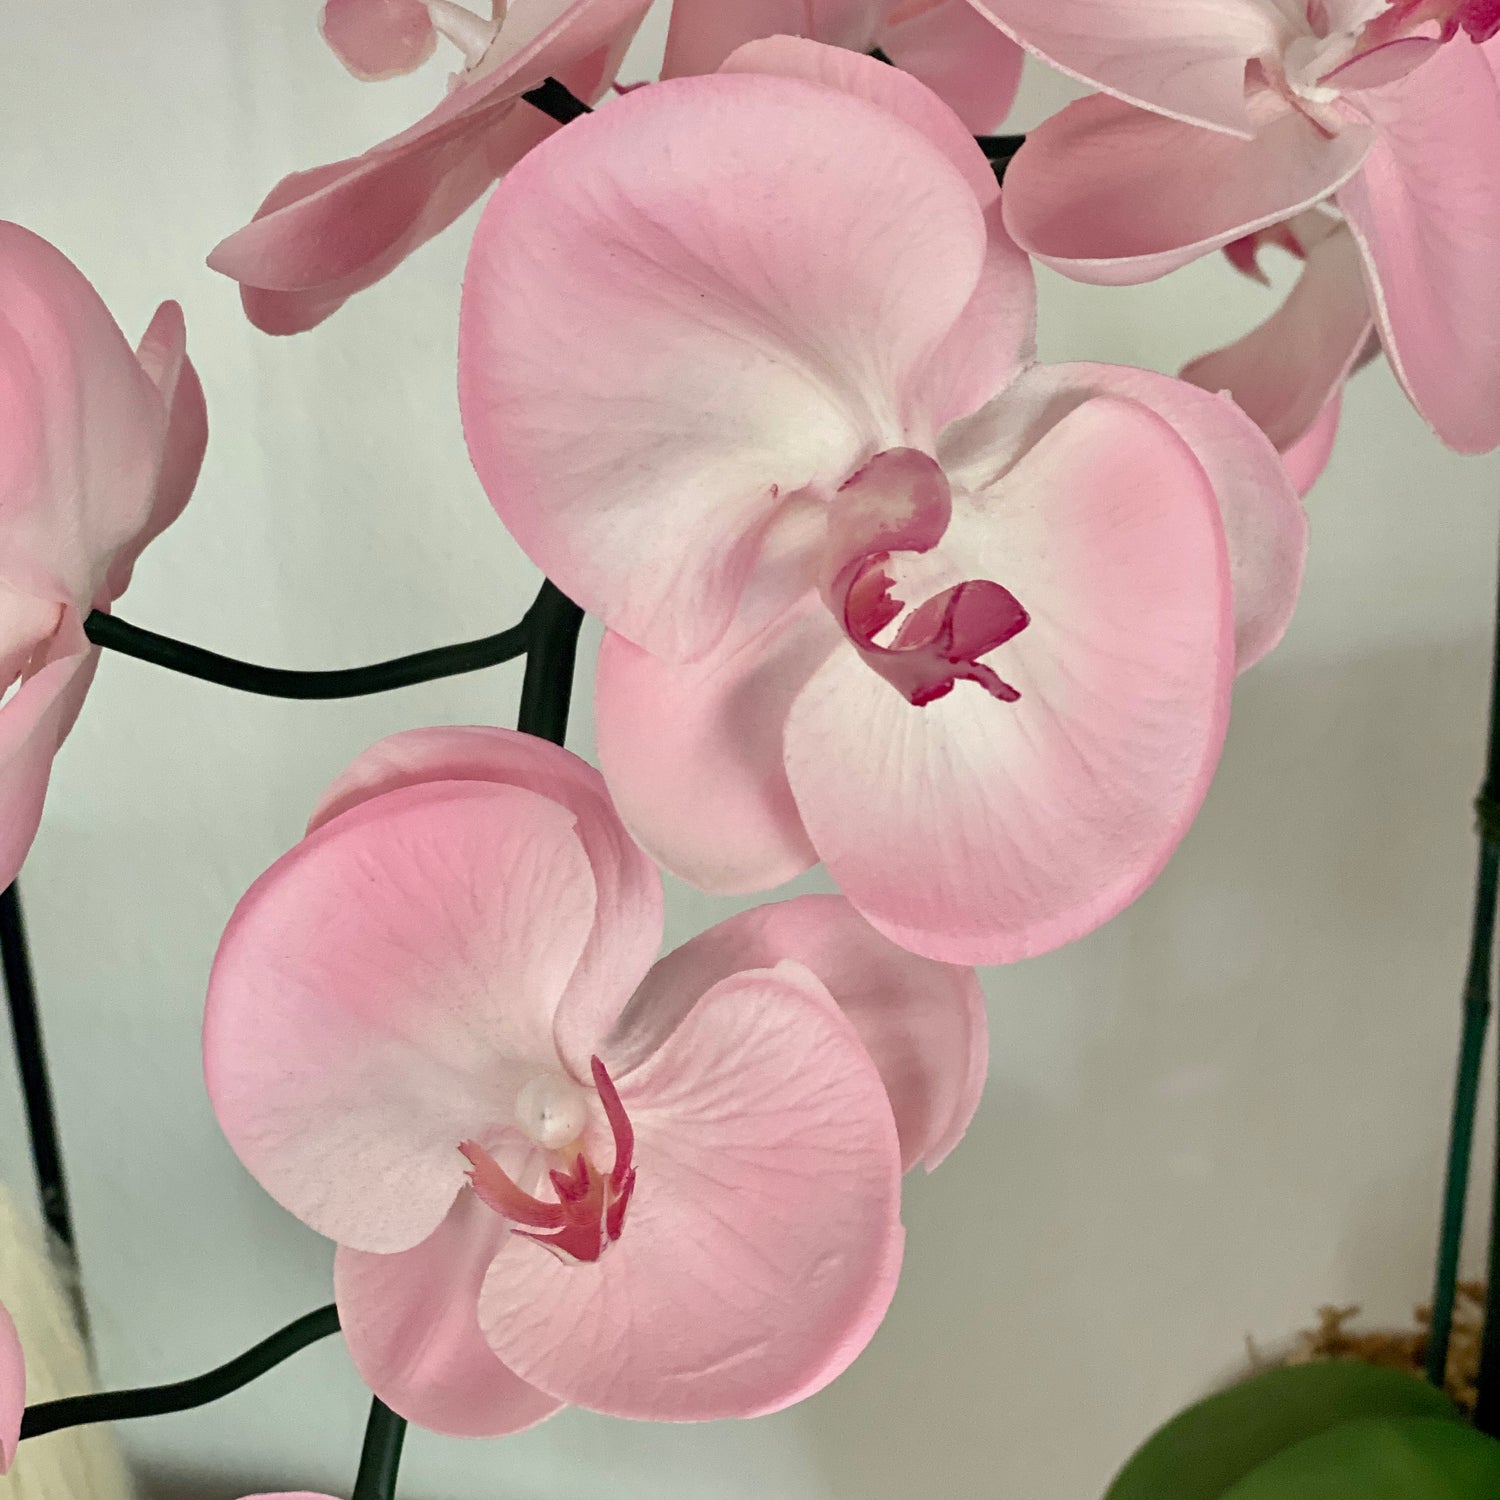 Light Pink Orchid - 3 stem arrangement